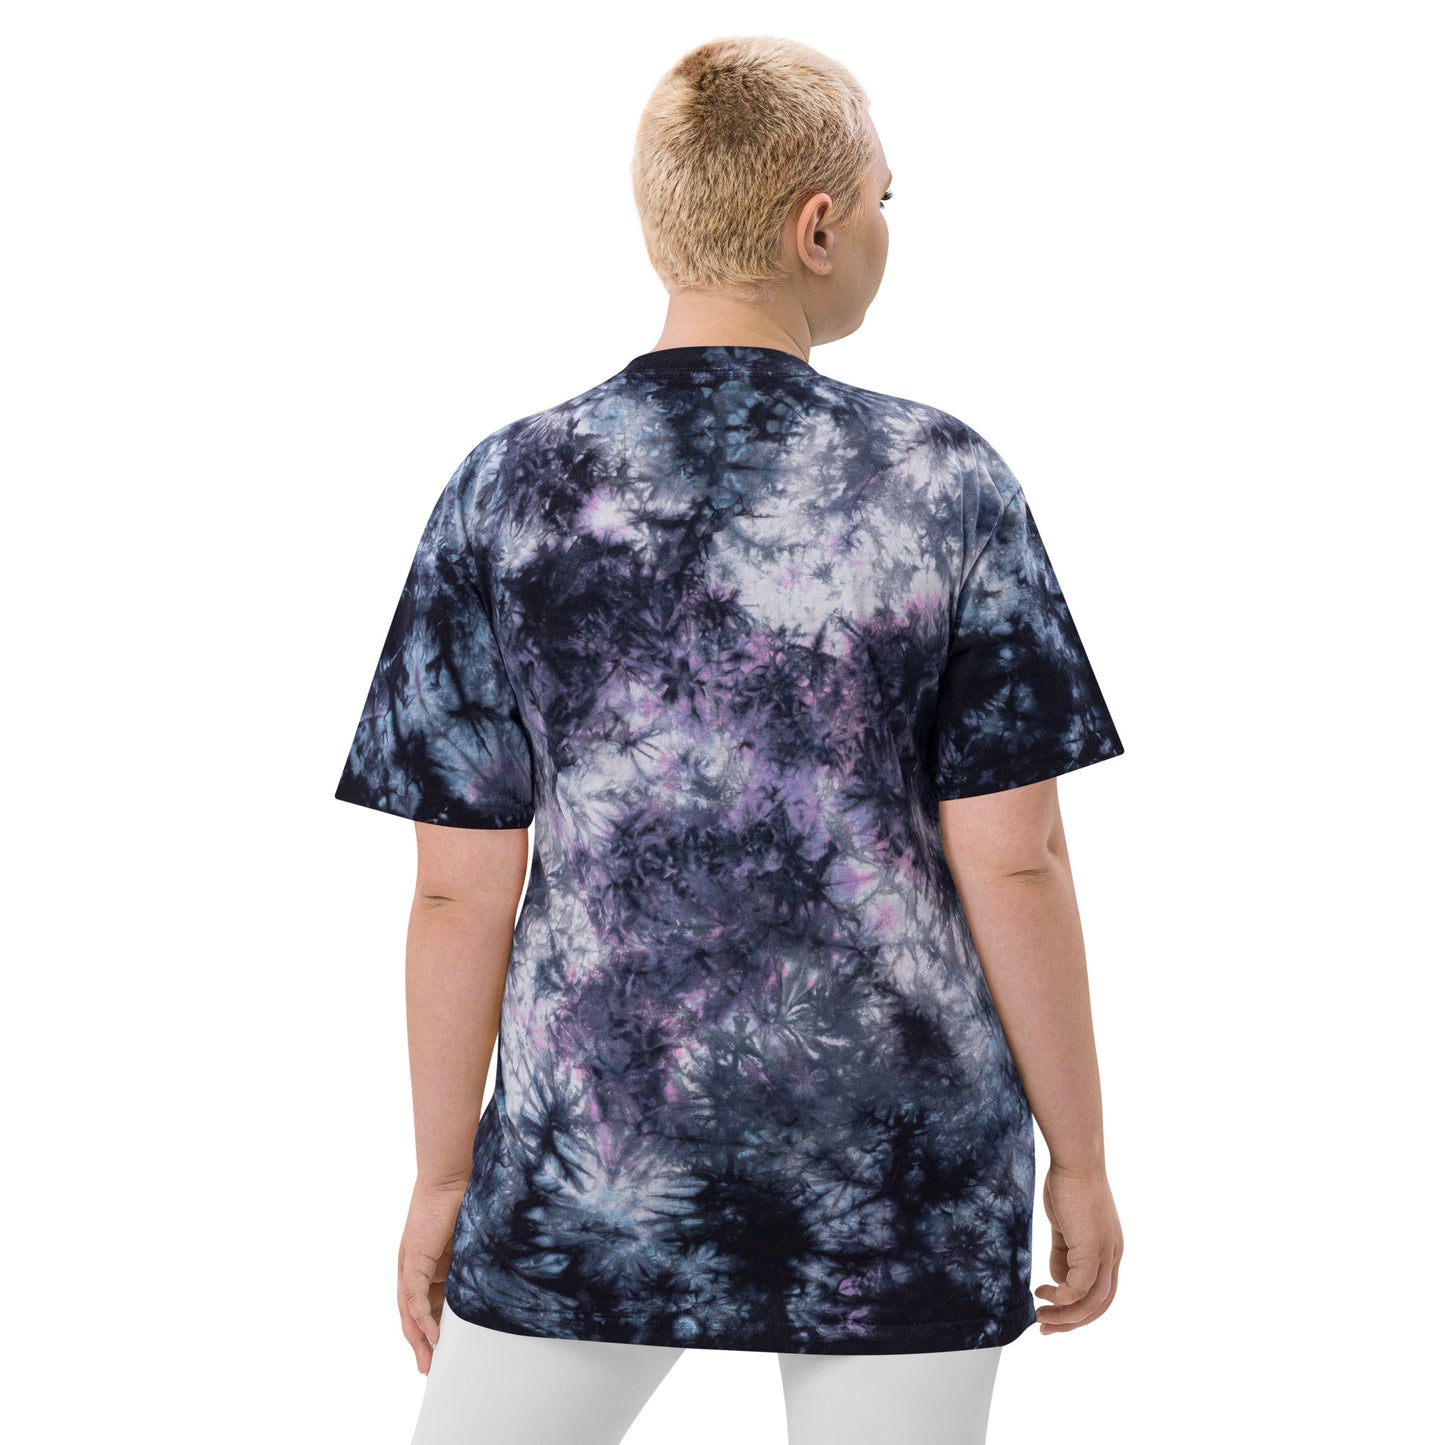 Tie Dye T-Shirt: Milky Way (Glamourange Oversized Tie-Dye T-Shirts)